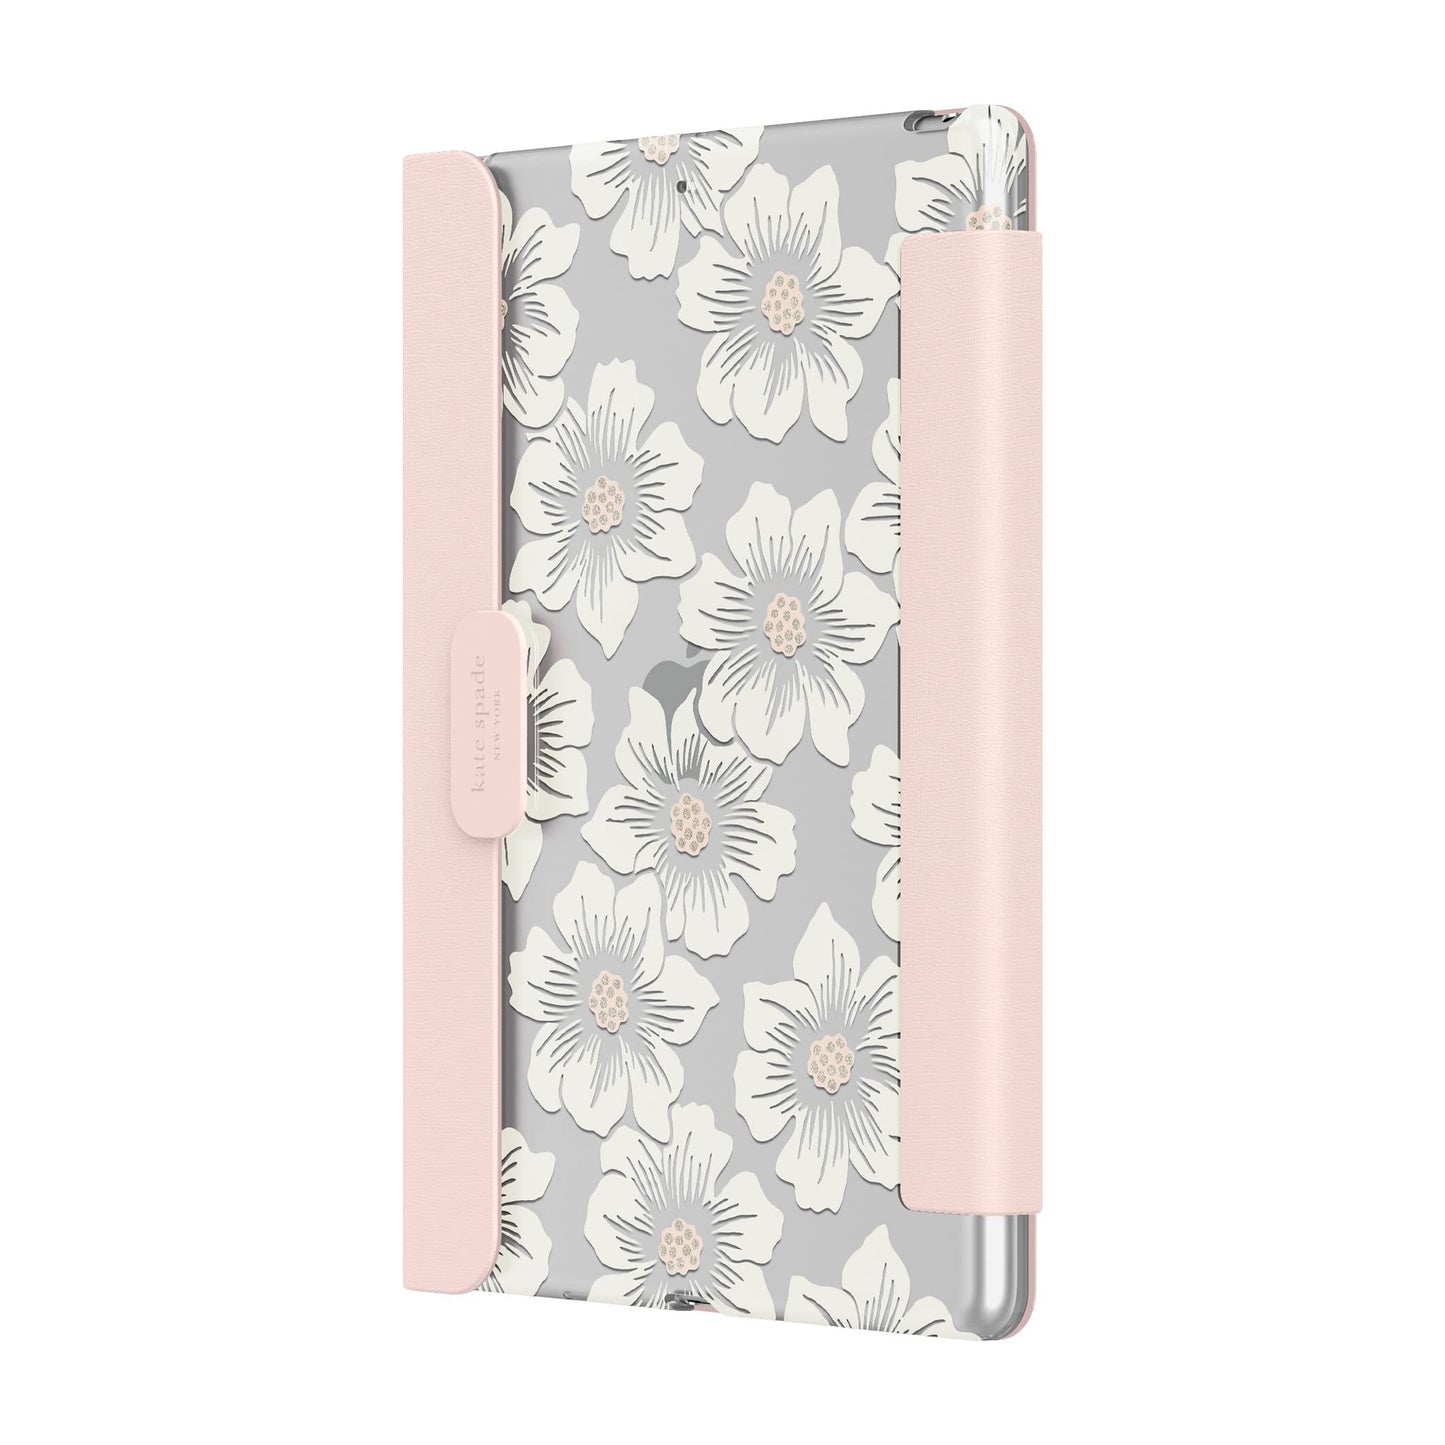 Kate Spade New York Protective Folio Case for iPad 10.2" (9th, 8th & 7th Generation) - Hollyhock/Blush/Clear/Blush Lambskin/Blush Tonal Closure